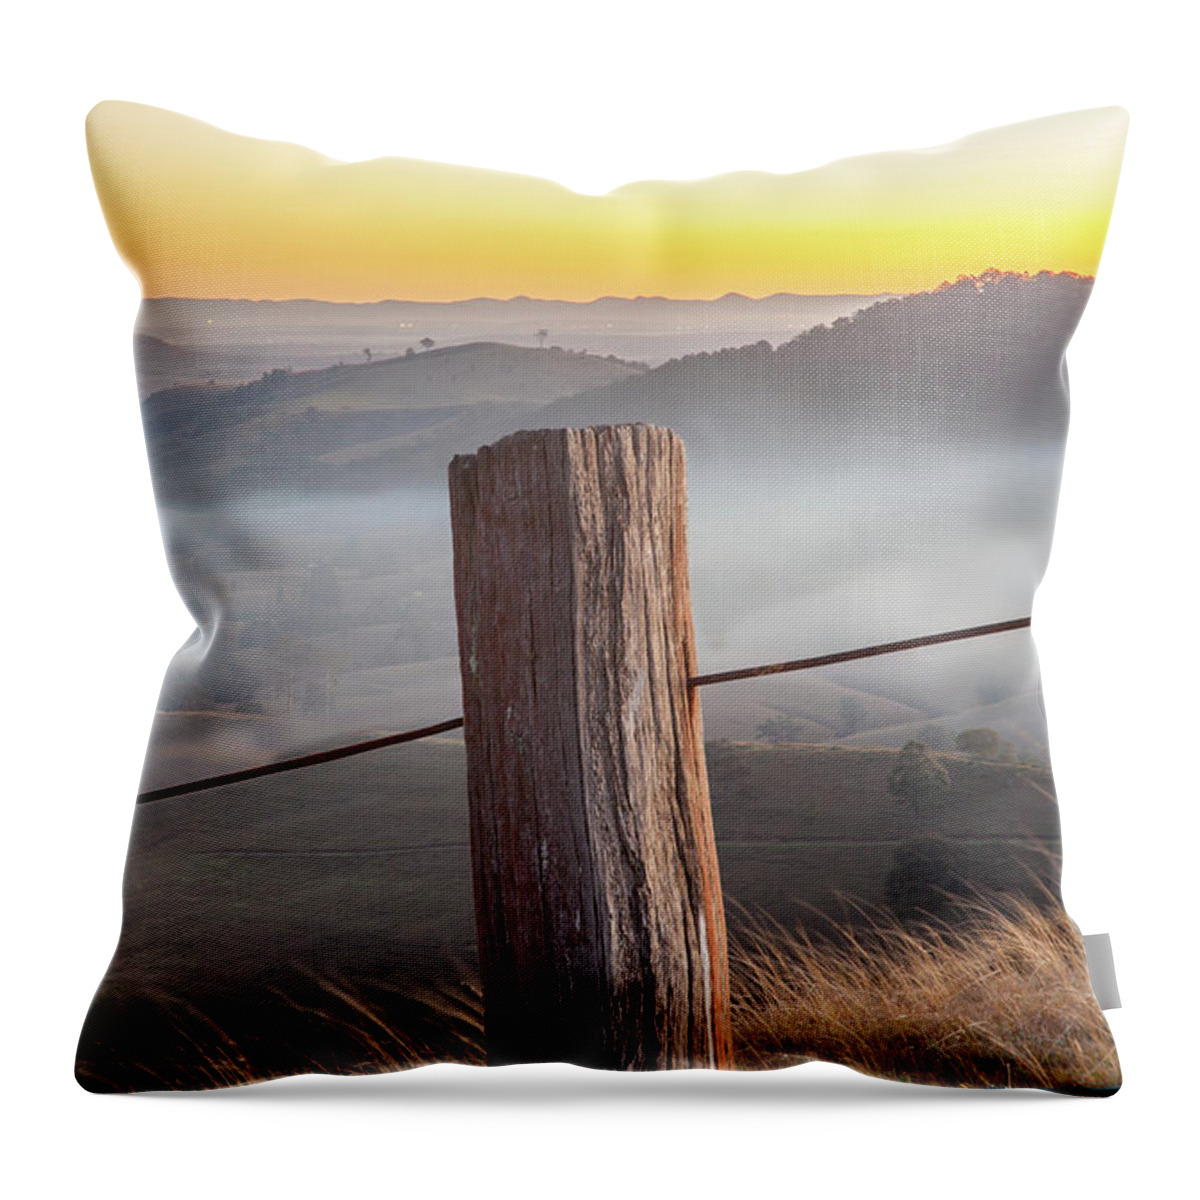 Australia Throw Pillow featuring the photograph High Country by Az Jackson